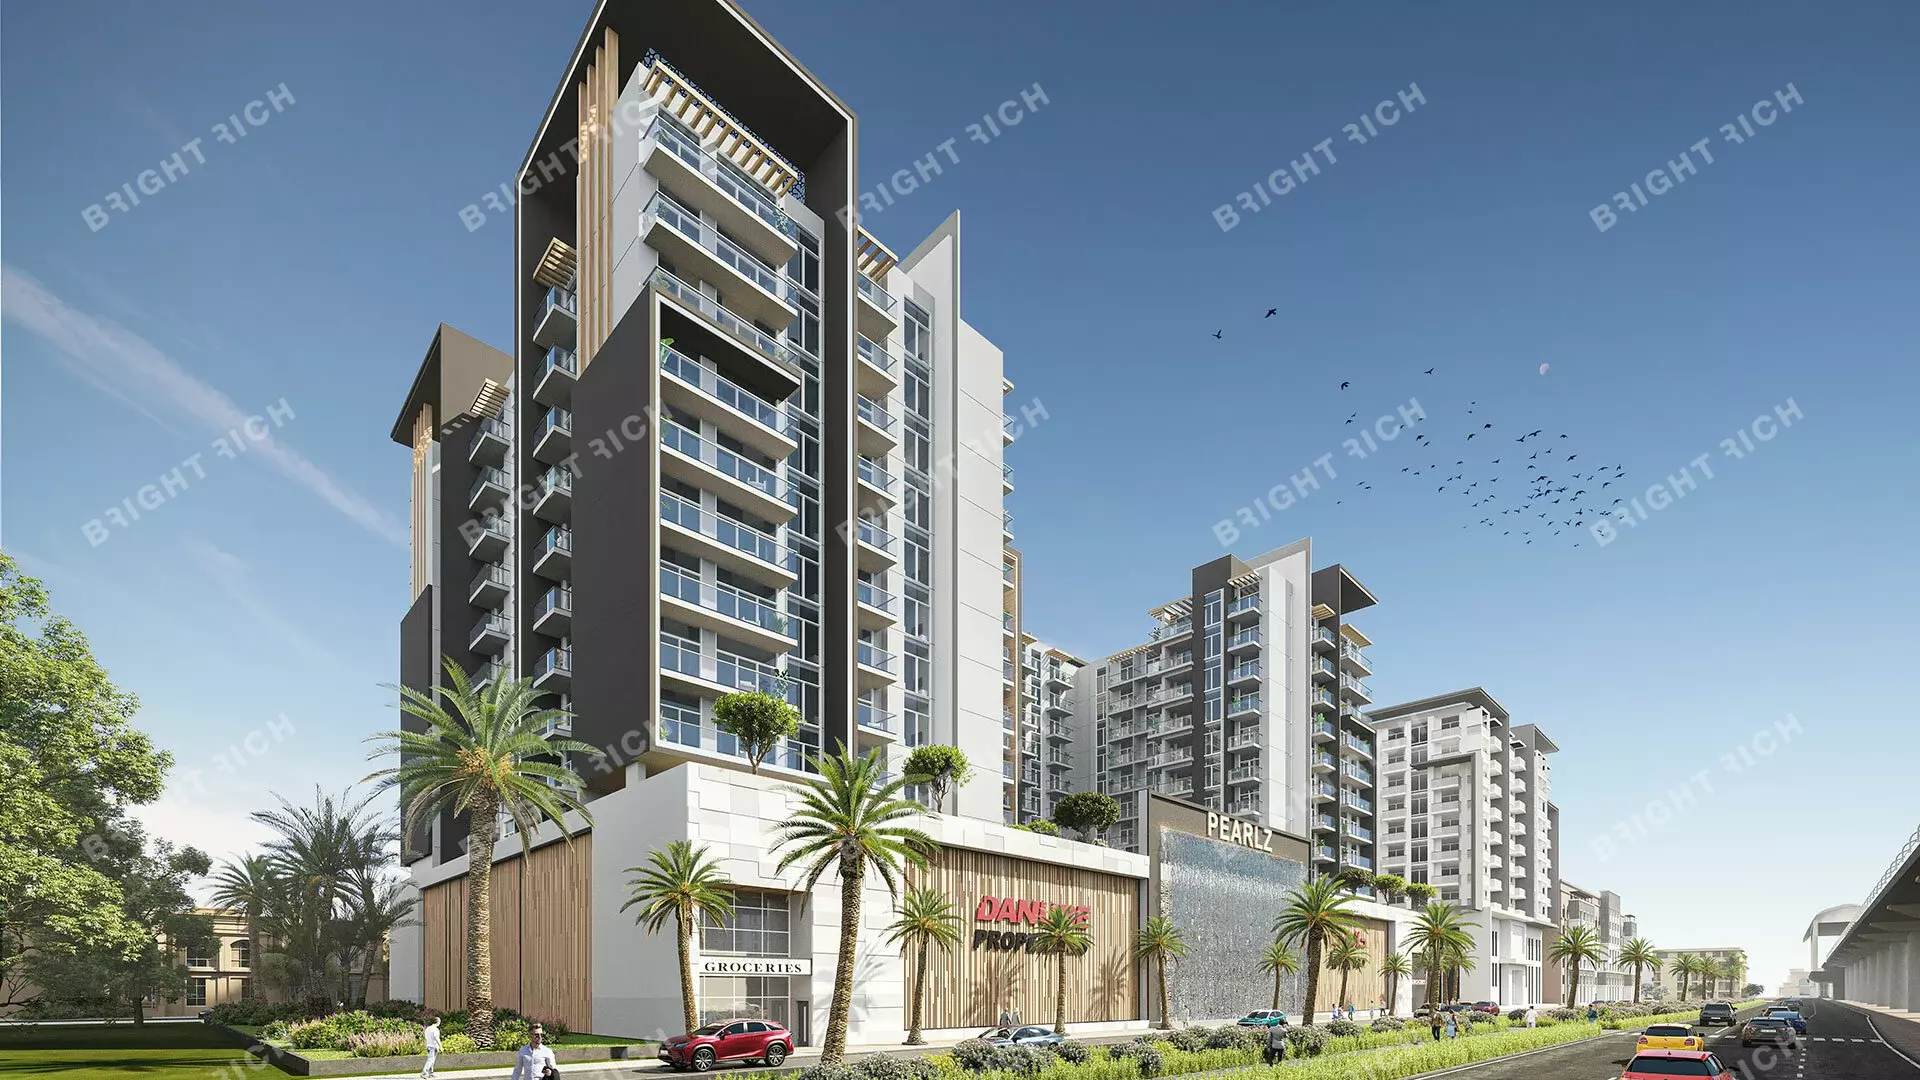 Pearlz Apartments, apart complex in Dubai - 2